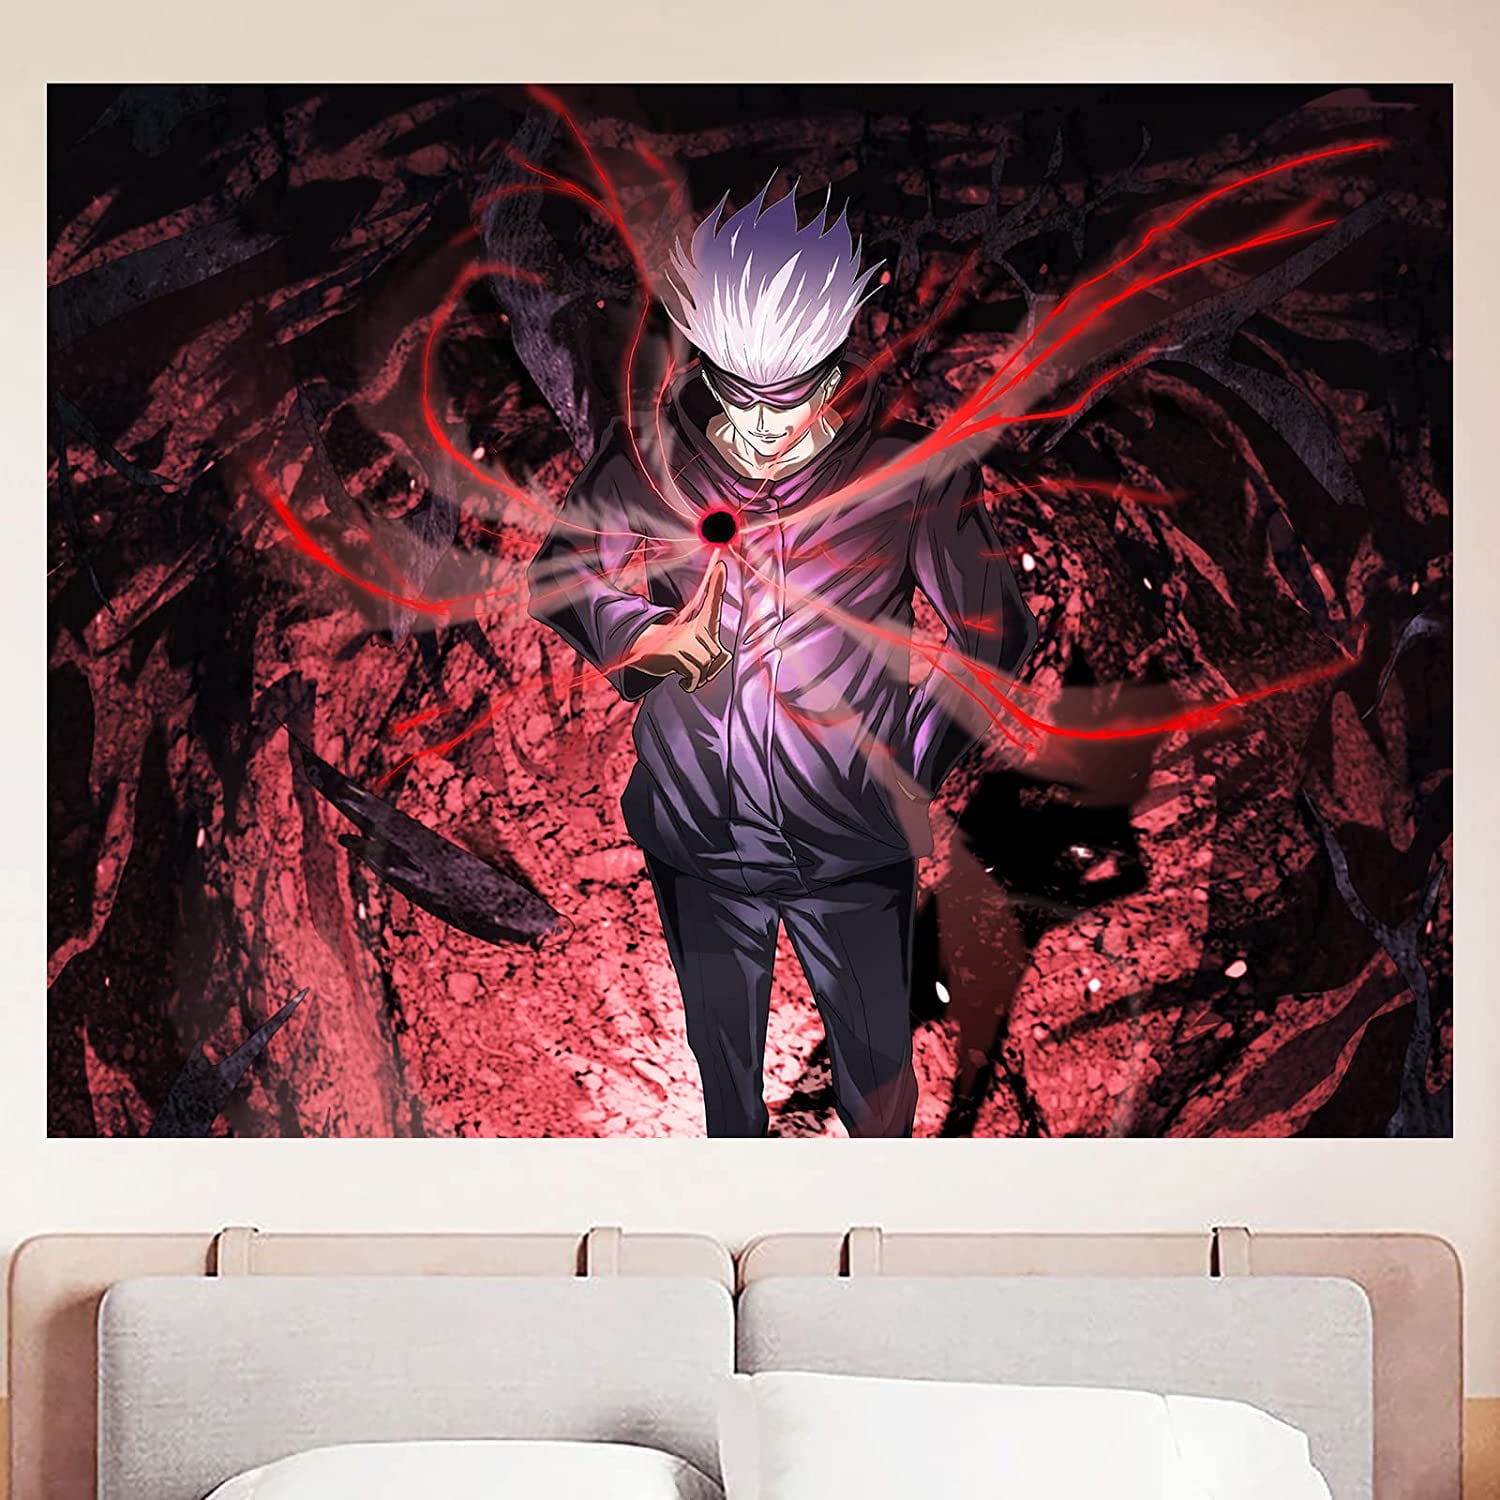 21+ anime bedroom ideas create a fantastic manga inspired room in budget |  PDF